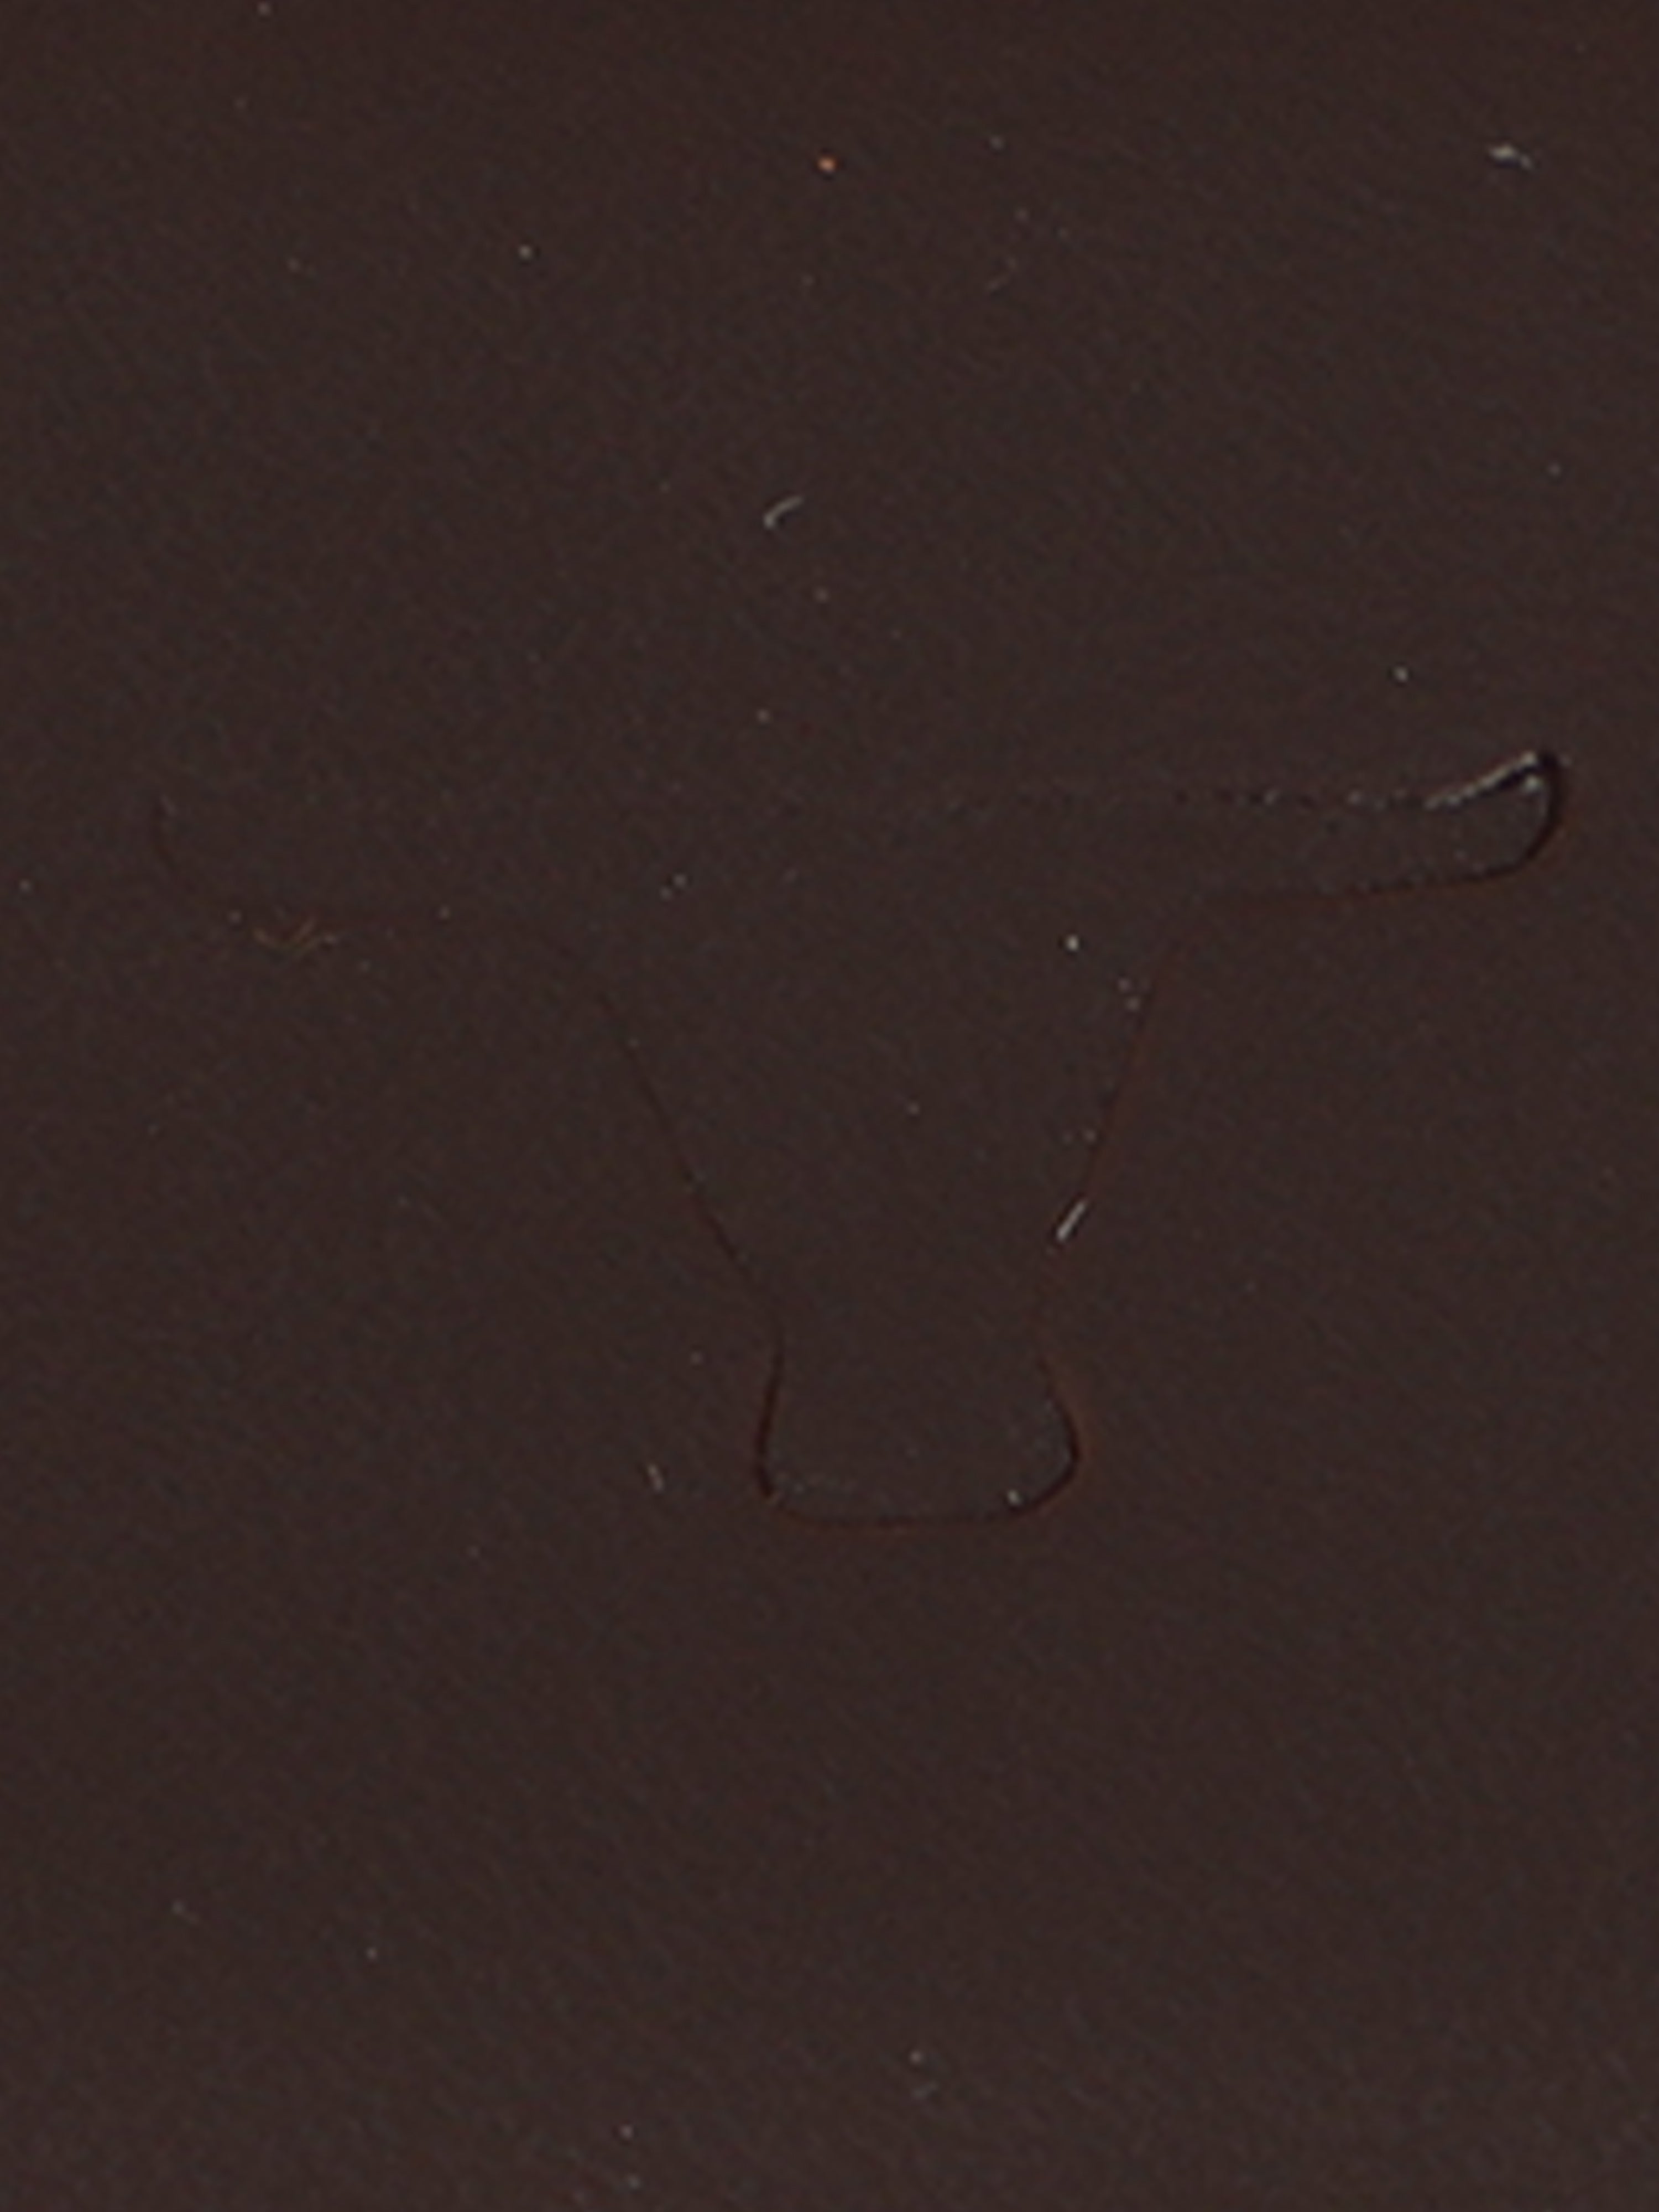 BULCHEE Premium Collections Men's Genuine Leather Belt | Plain Chino | Brown | BUL2139B